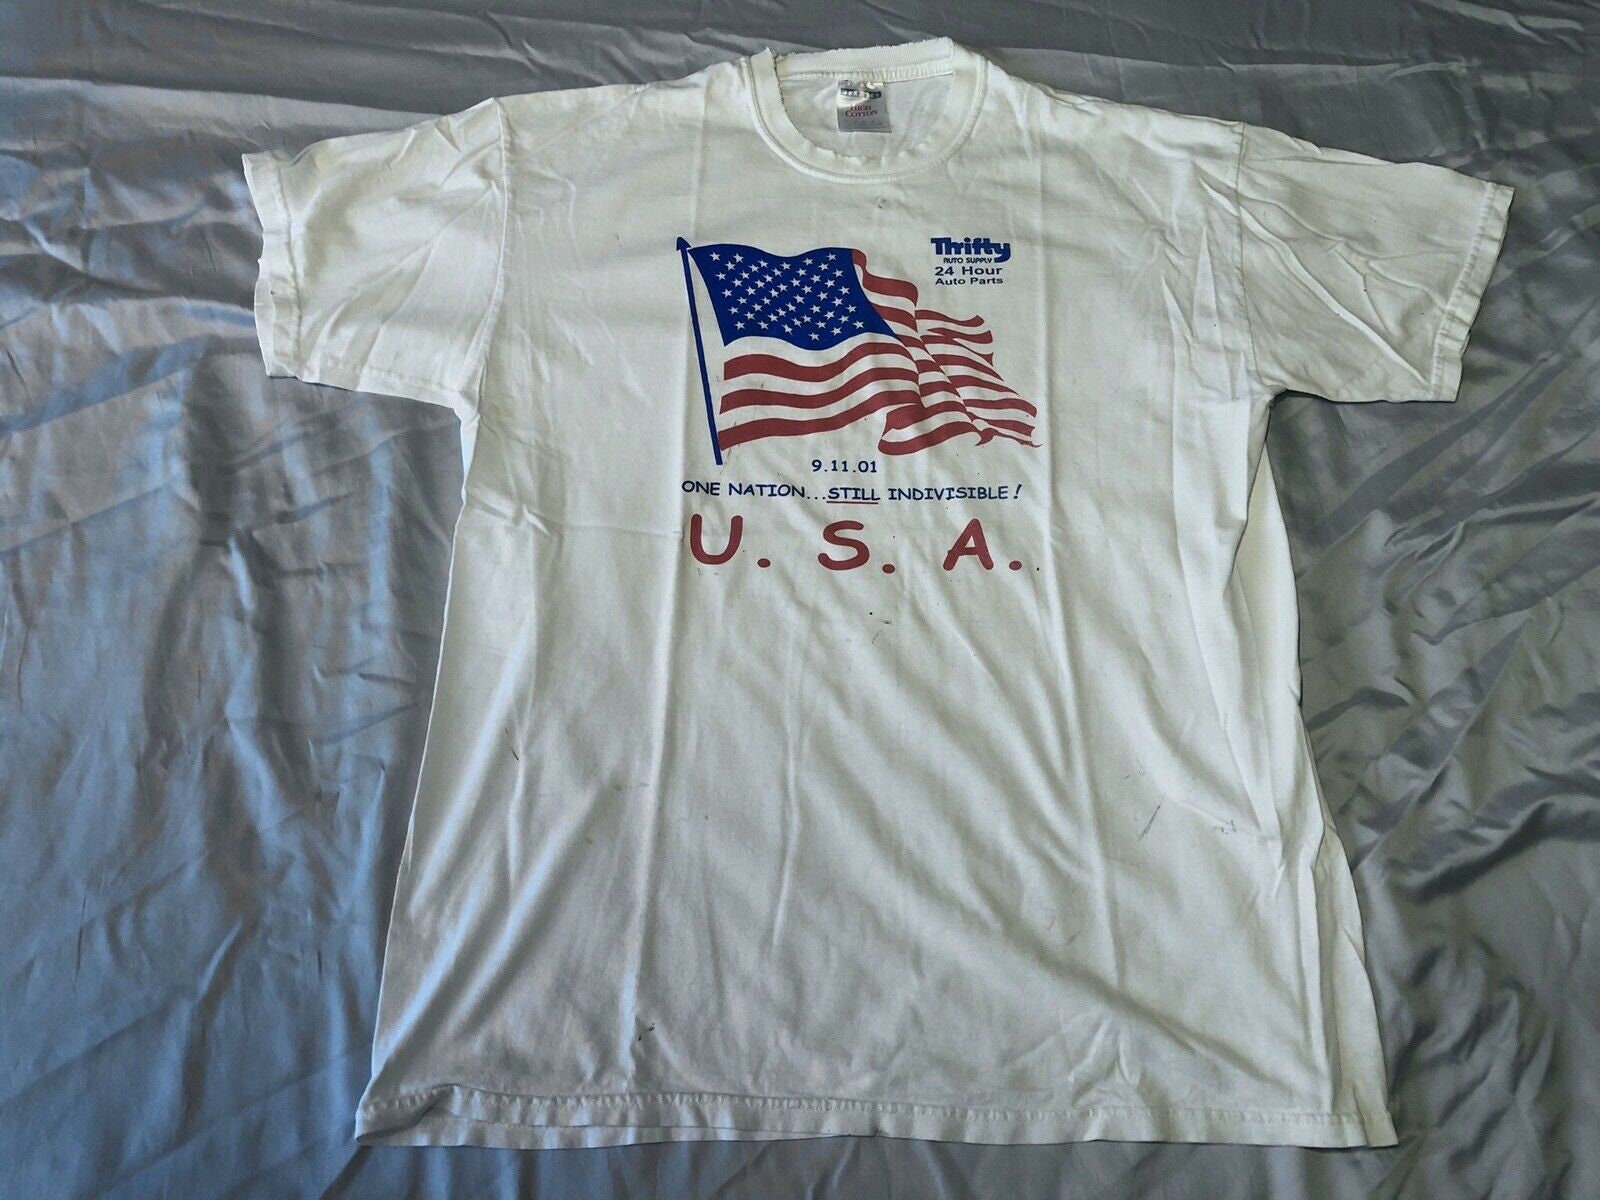 Vintage 2001 Thrifty Auto 9/11 Memorial USA Flag T-shirt - Etsy